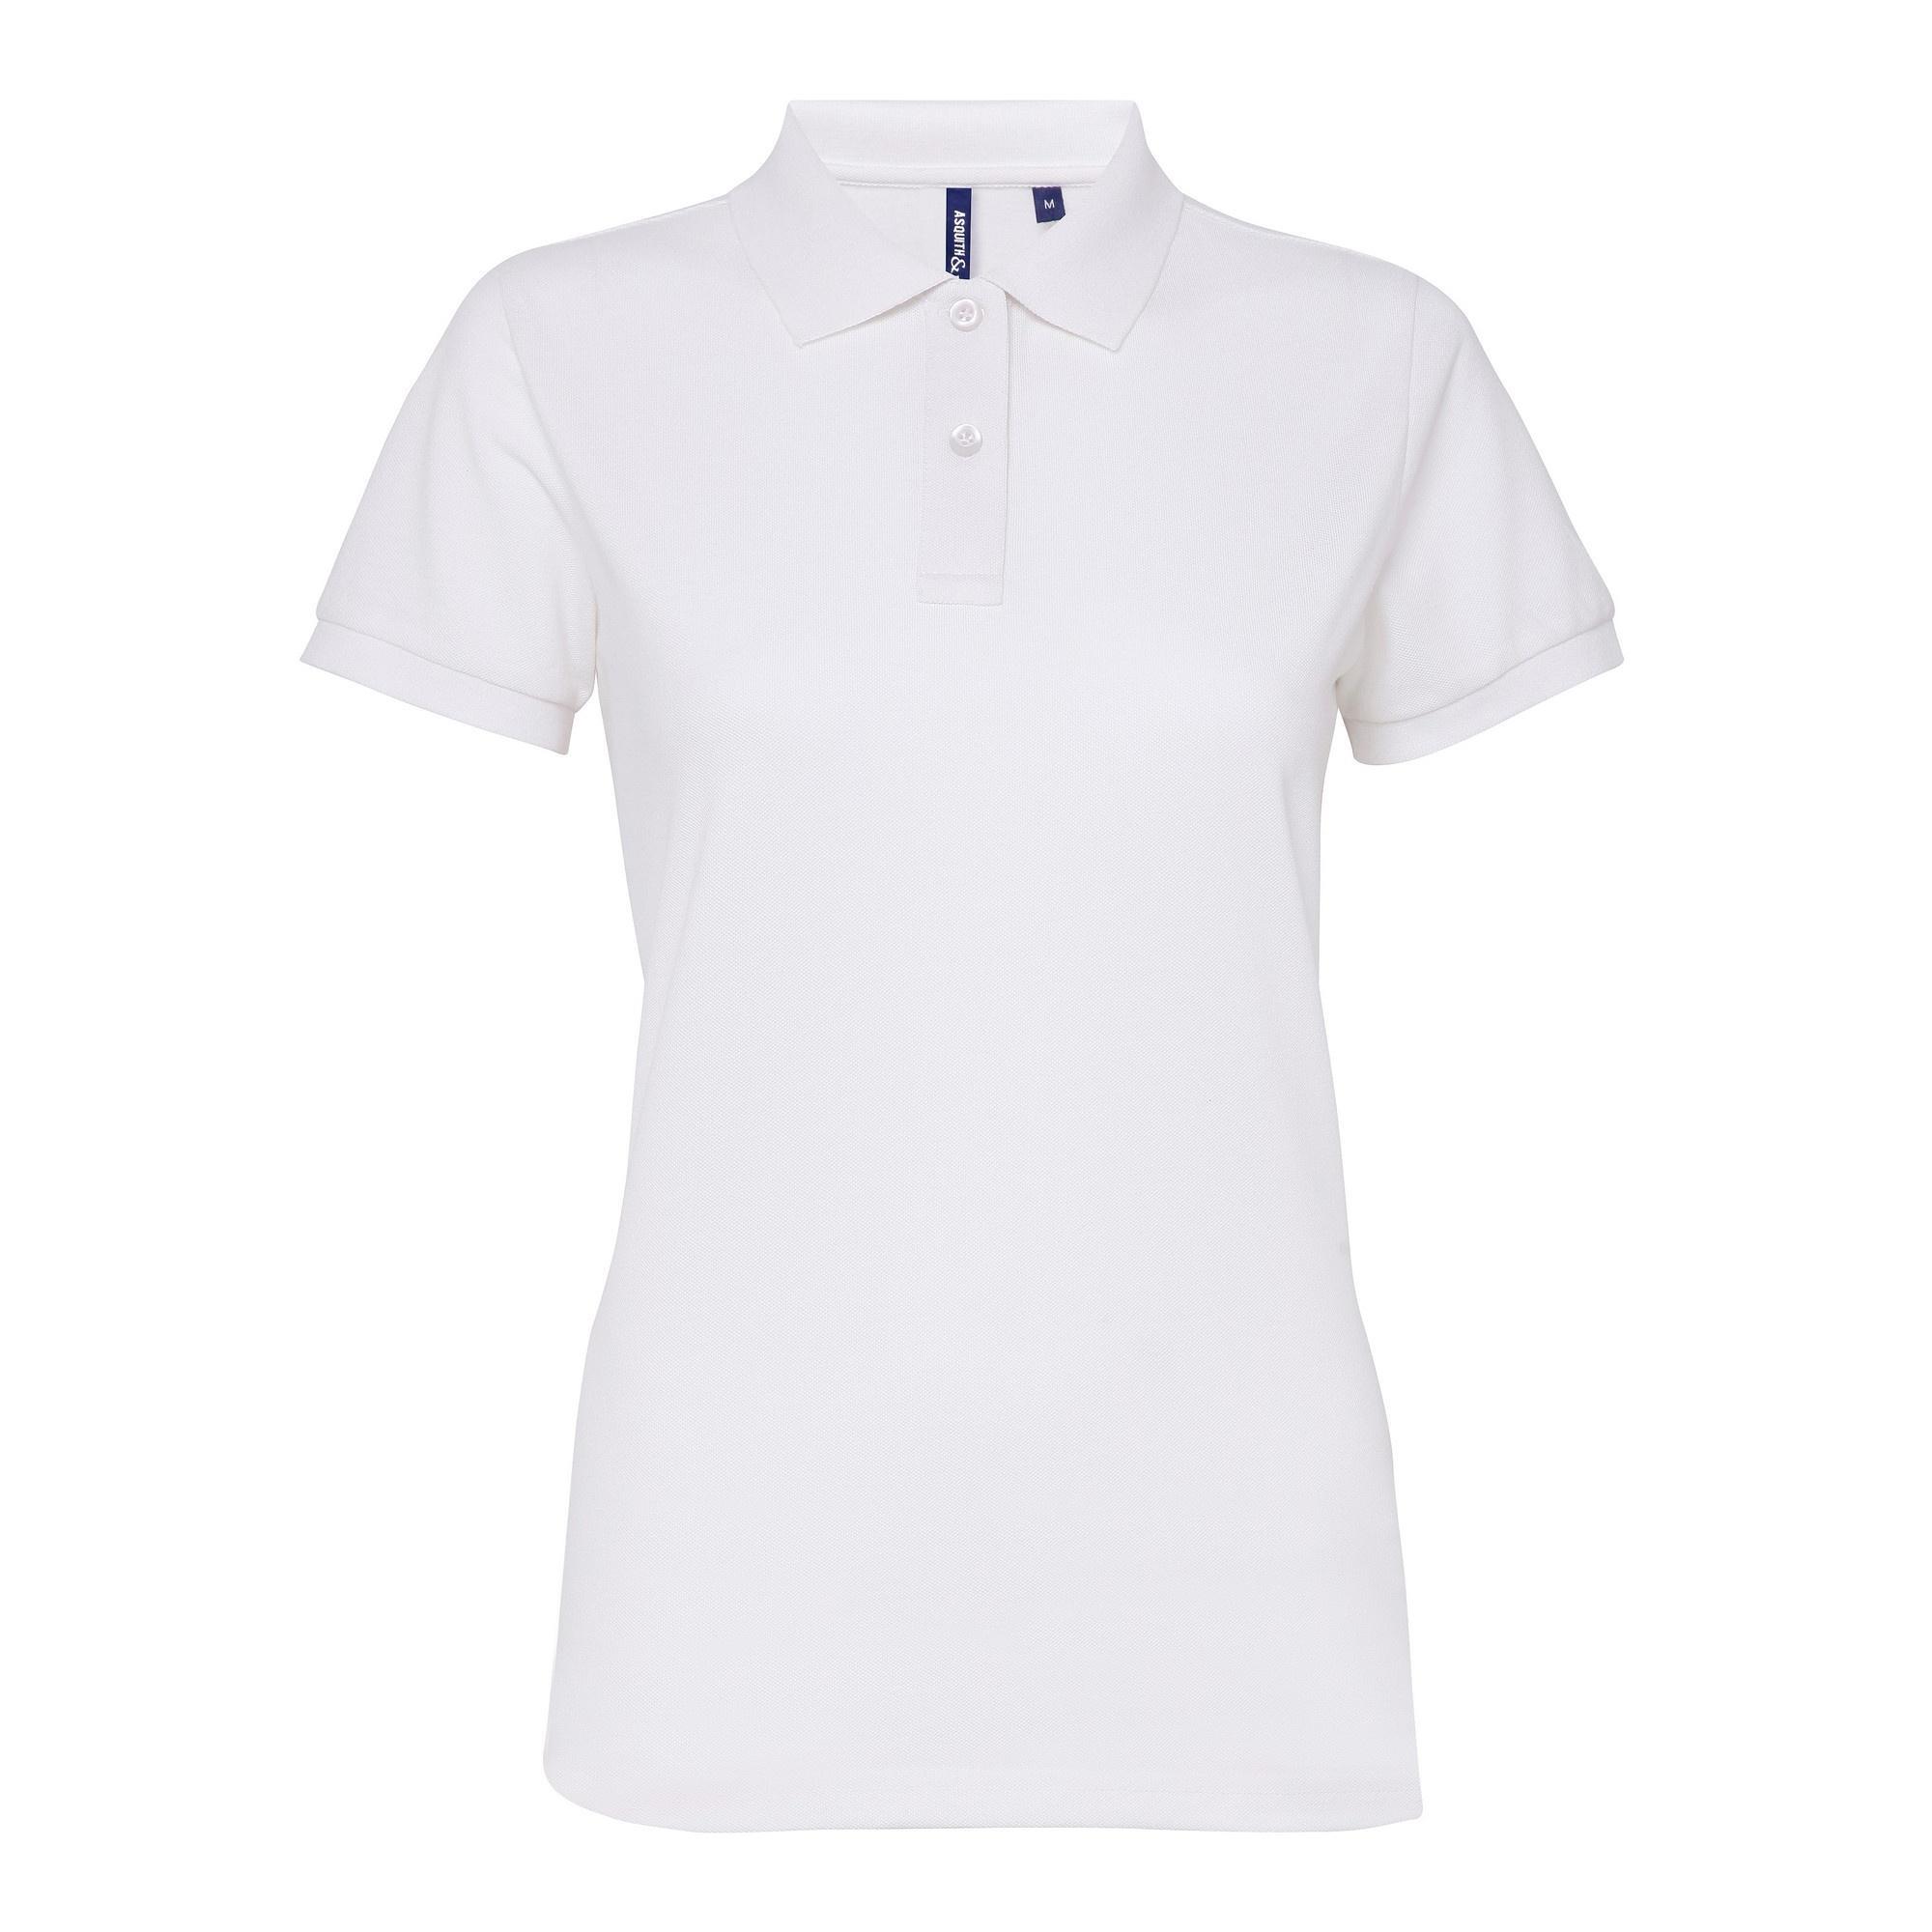 Asquith & Fox Womens/Ladies Short Sleeve Performance Blend Polo Shirt (White) (L)